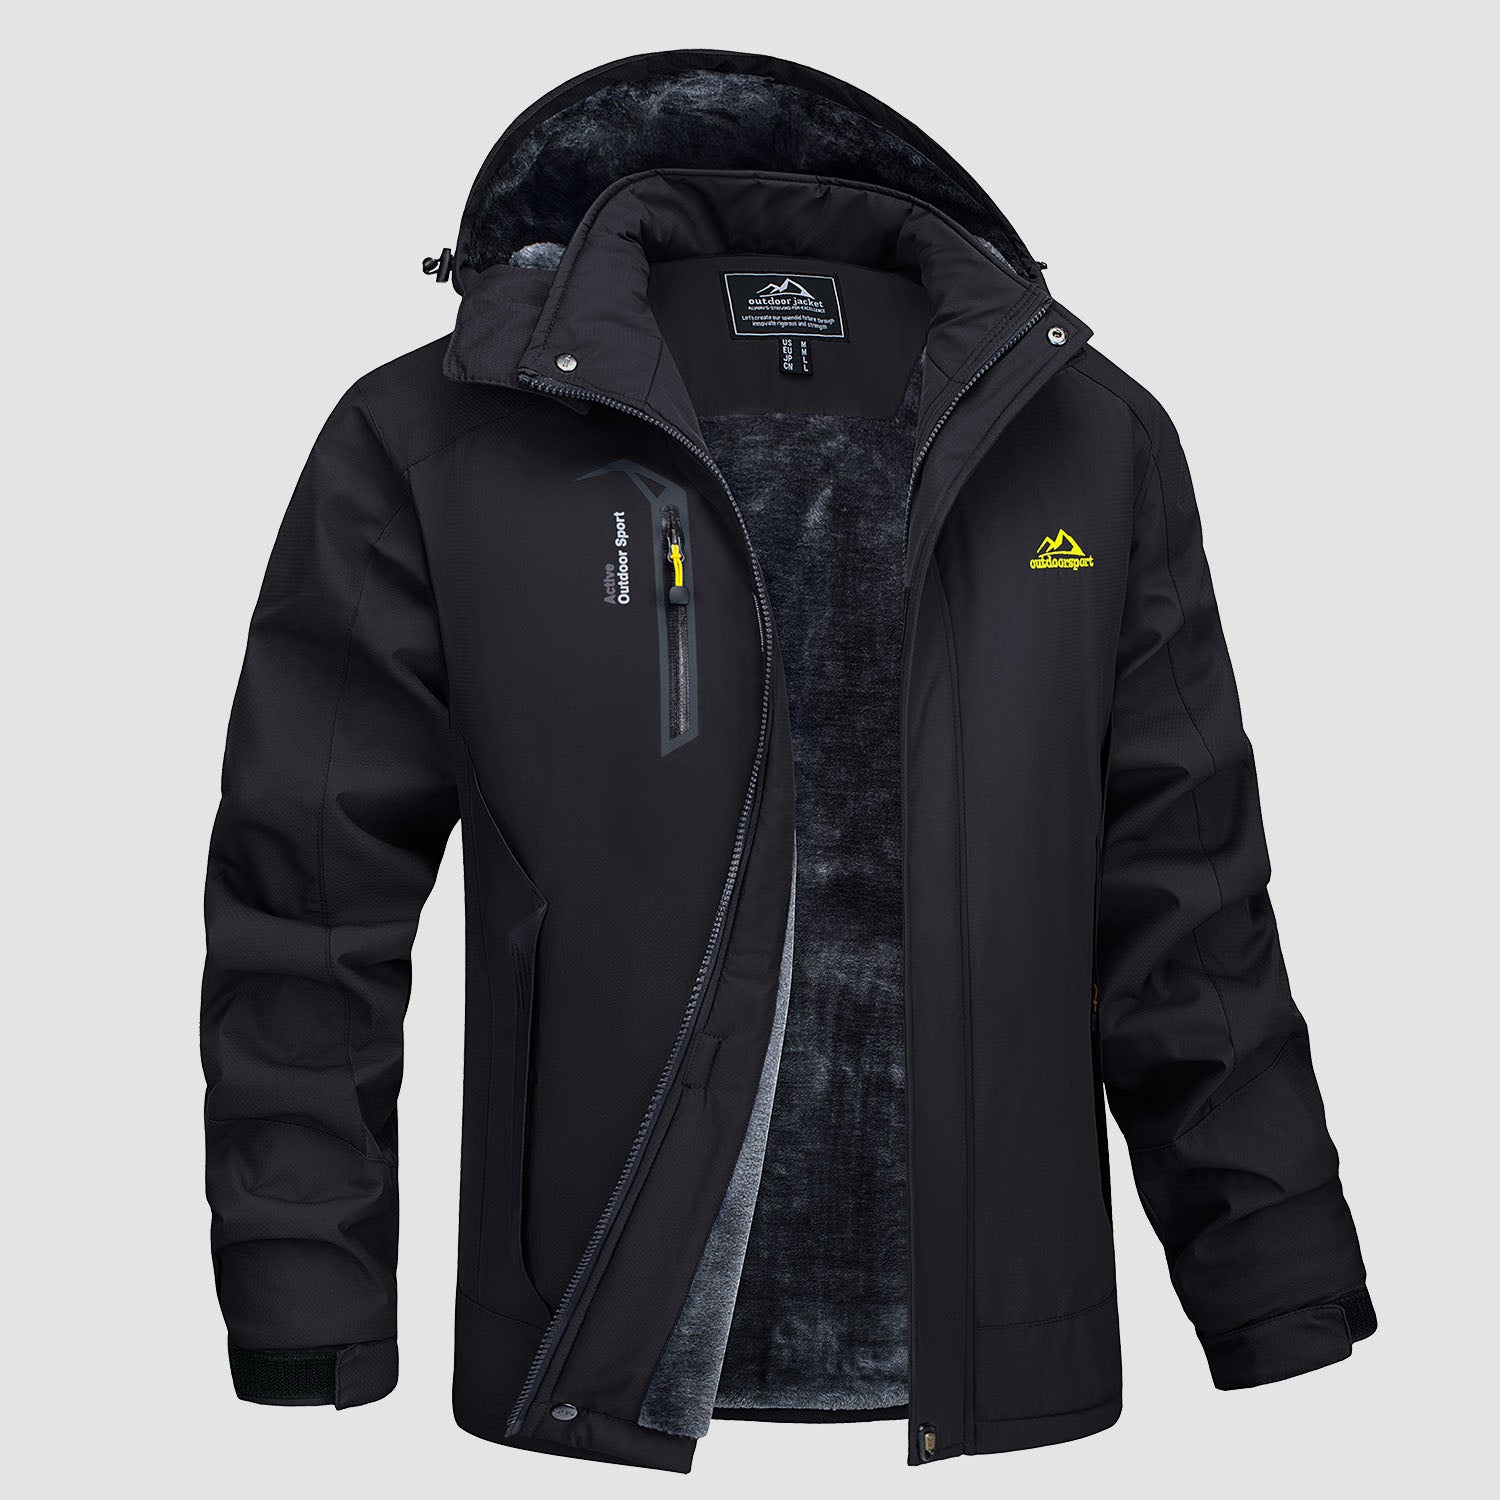 Men's Mountain Ski Snow Jacket Thermal Fleece Winter Wam Hiking Waterproof  Coat